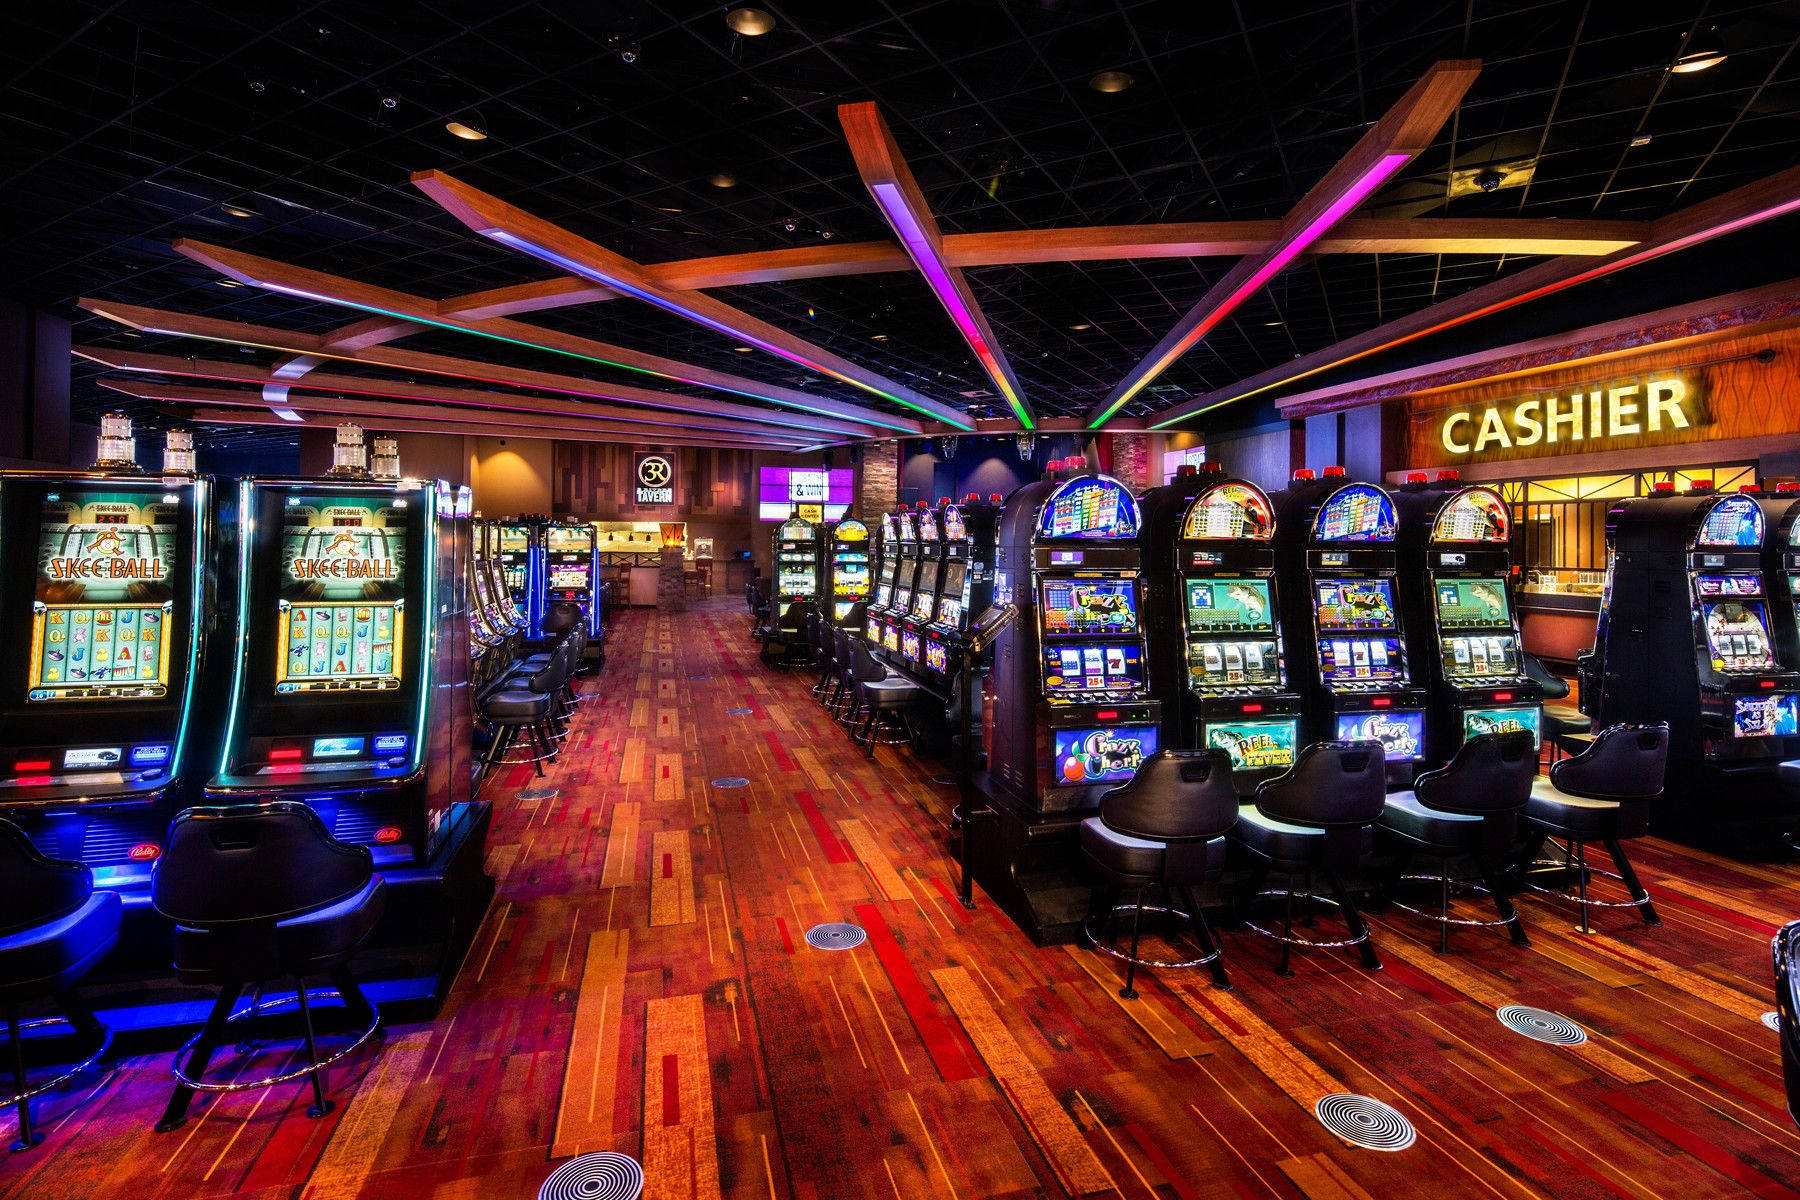 Keno Arcade Machines In Casino Wallpaper